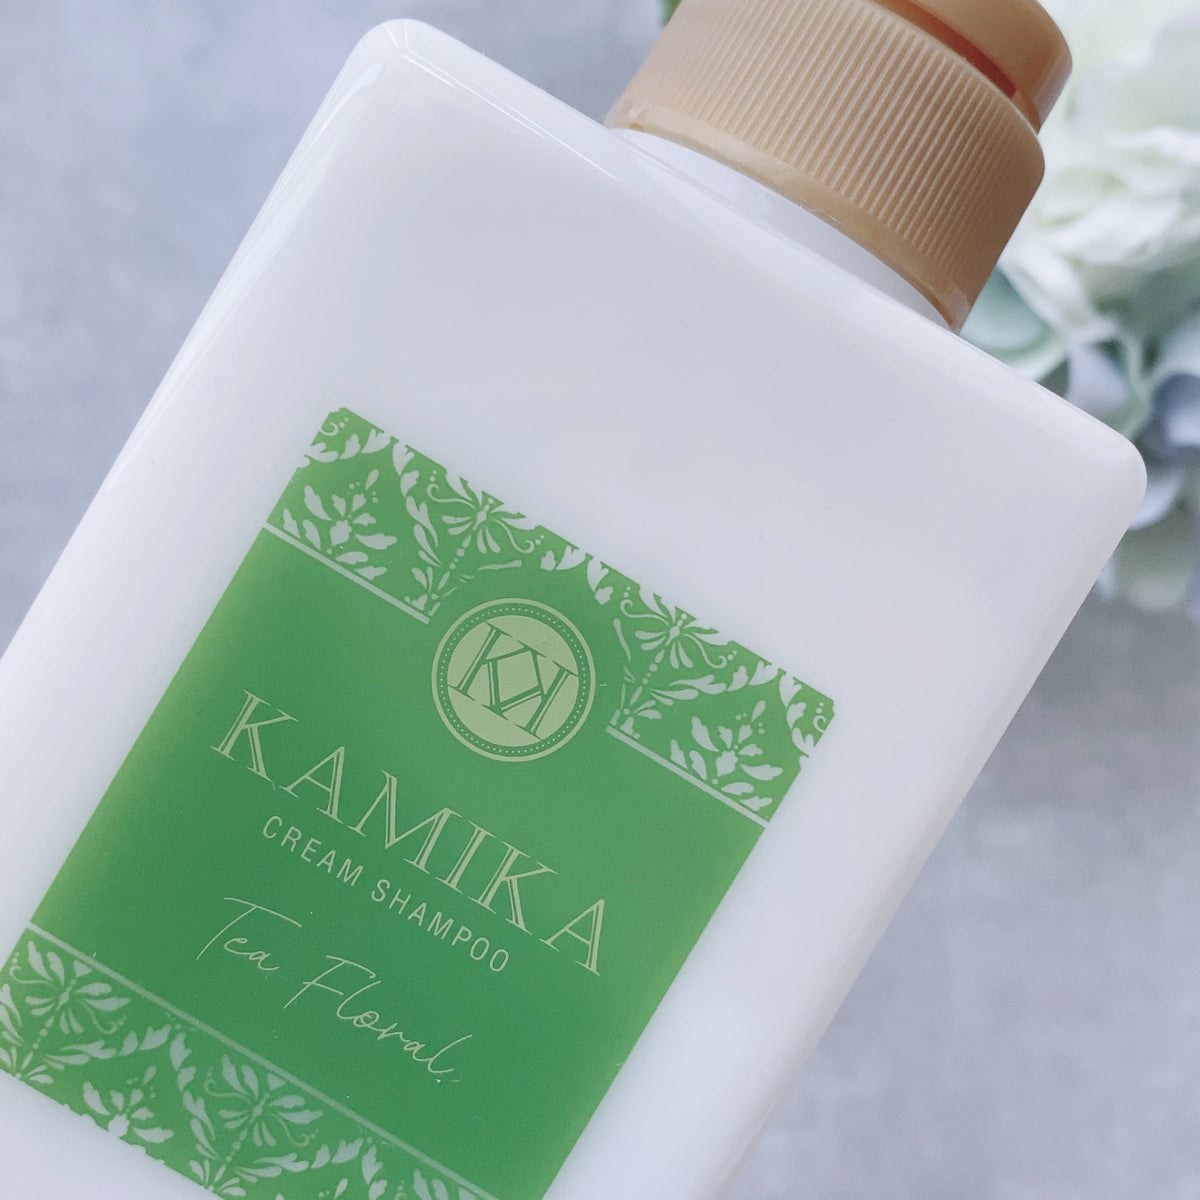 KAMIKA クリームシャンプー 3本セット  ティーフローラルの香り